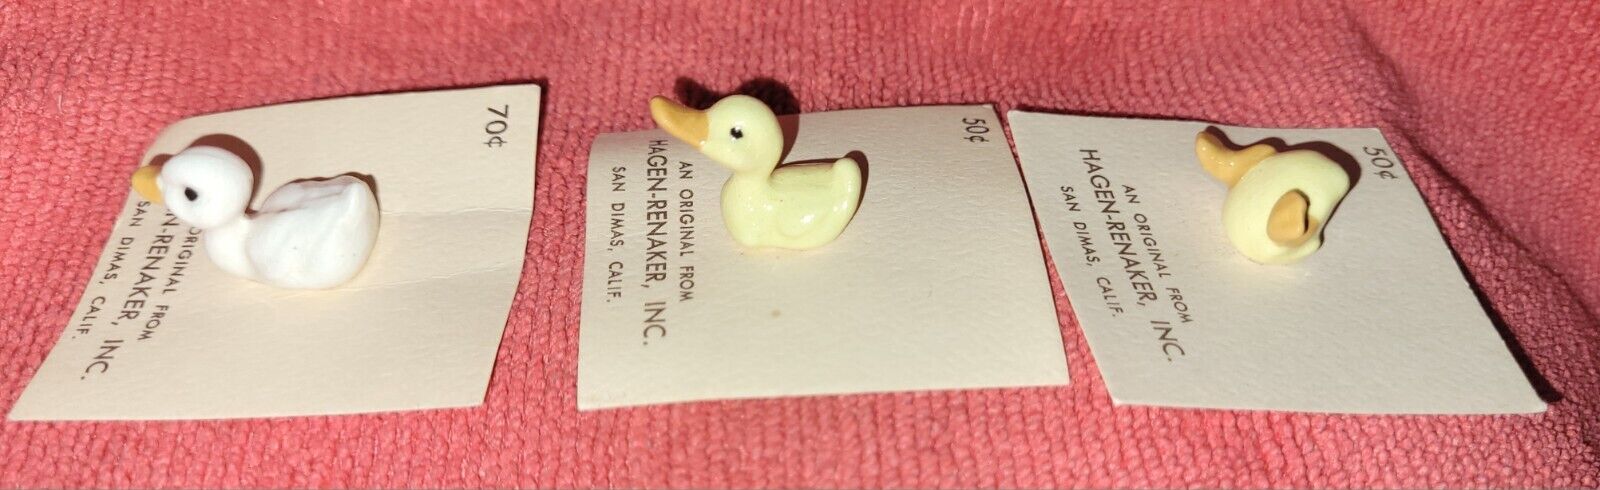 3 Vintage HR Hagen Renaker Porcelain Ducks With Bottoms Up Duck All On Packaging